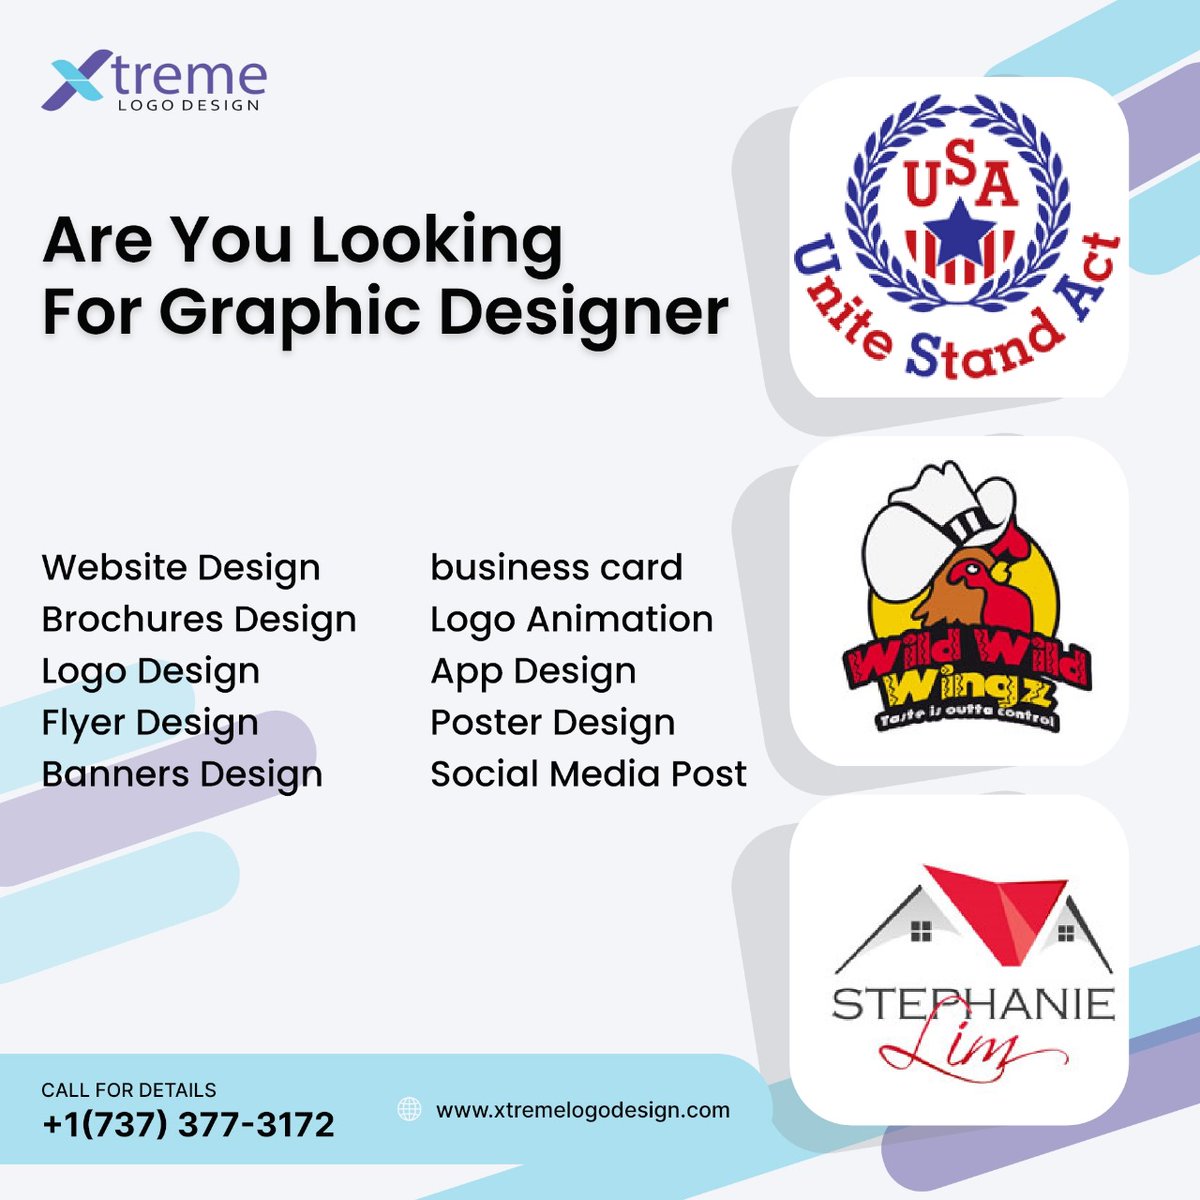 Websites, logos, banners, animations – we design them all. #XtremeLogoDesign #CreativeSolutions #GraphicDesign #WebDesign #businesscards #UXdesign #UIdesign #CreativeBranding #DesignMastery #GraphicDesignMastery #DigitalCraftsmanship #DesignElegance #DesignInnovation